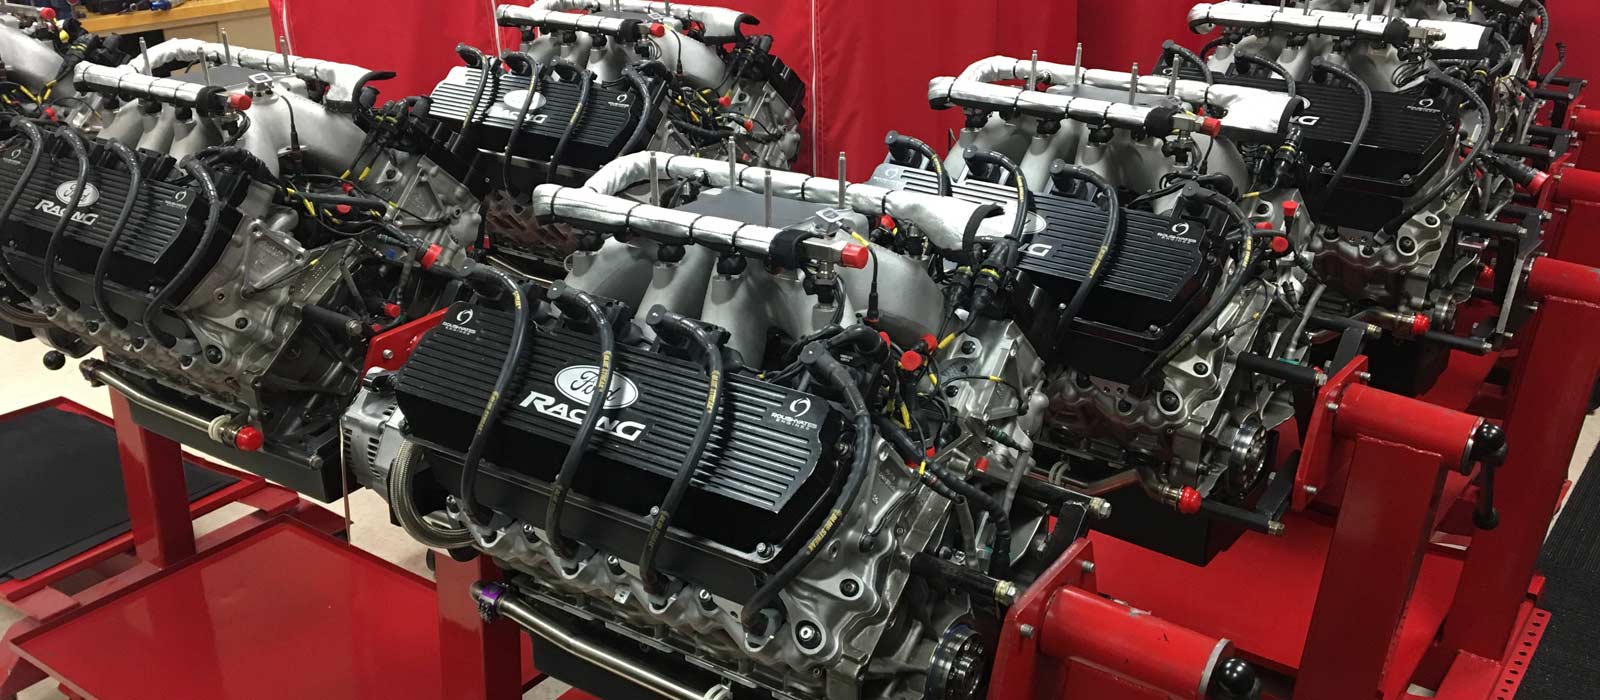 FR9 NASCAR Engines From Roush Yates Engines at NASCAR Tech